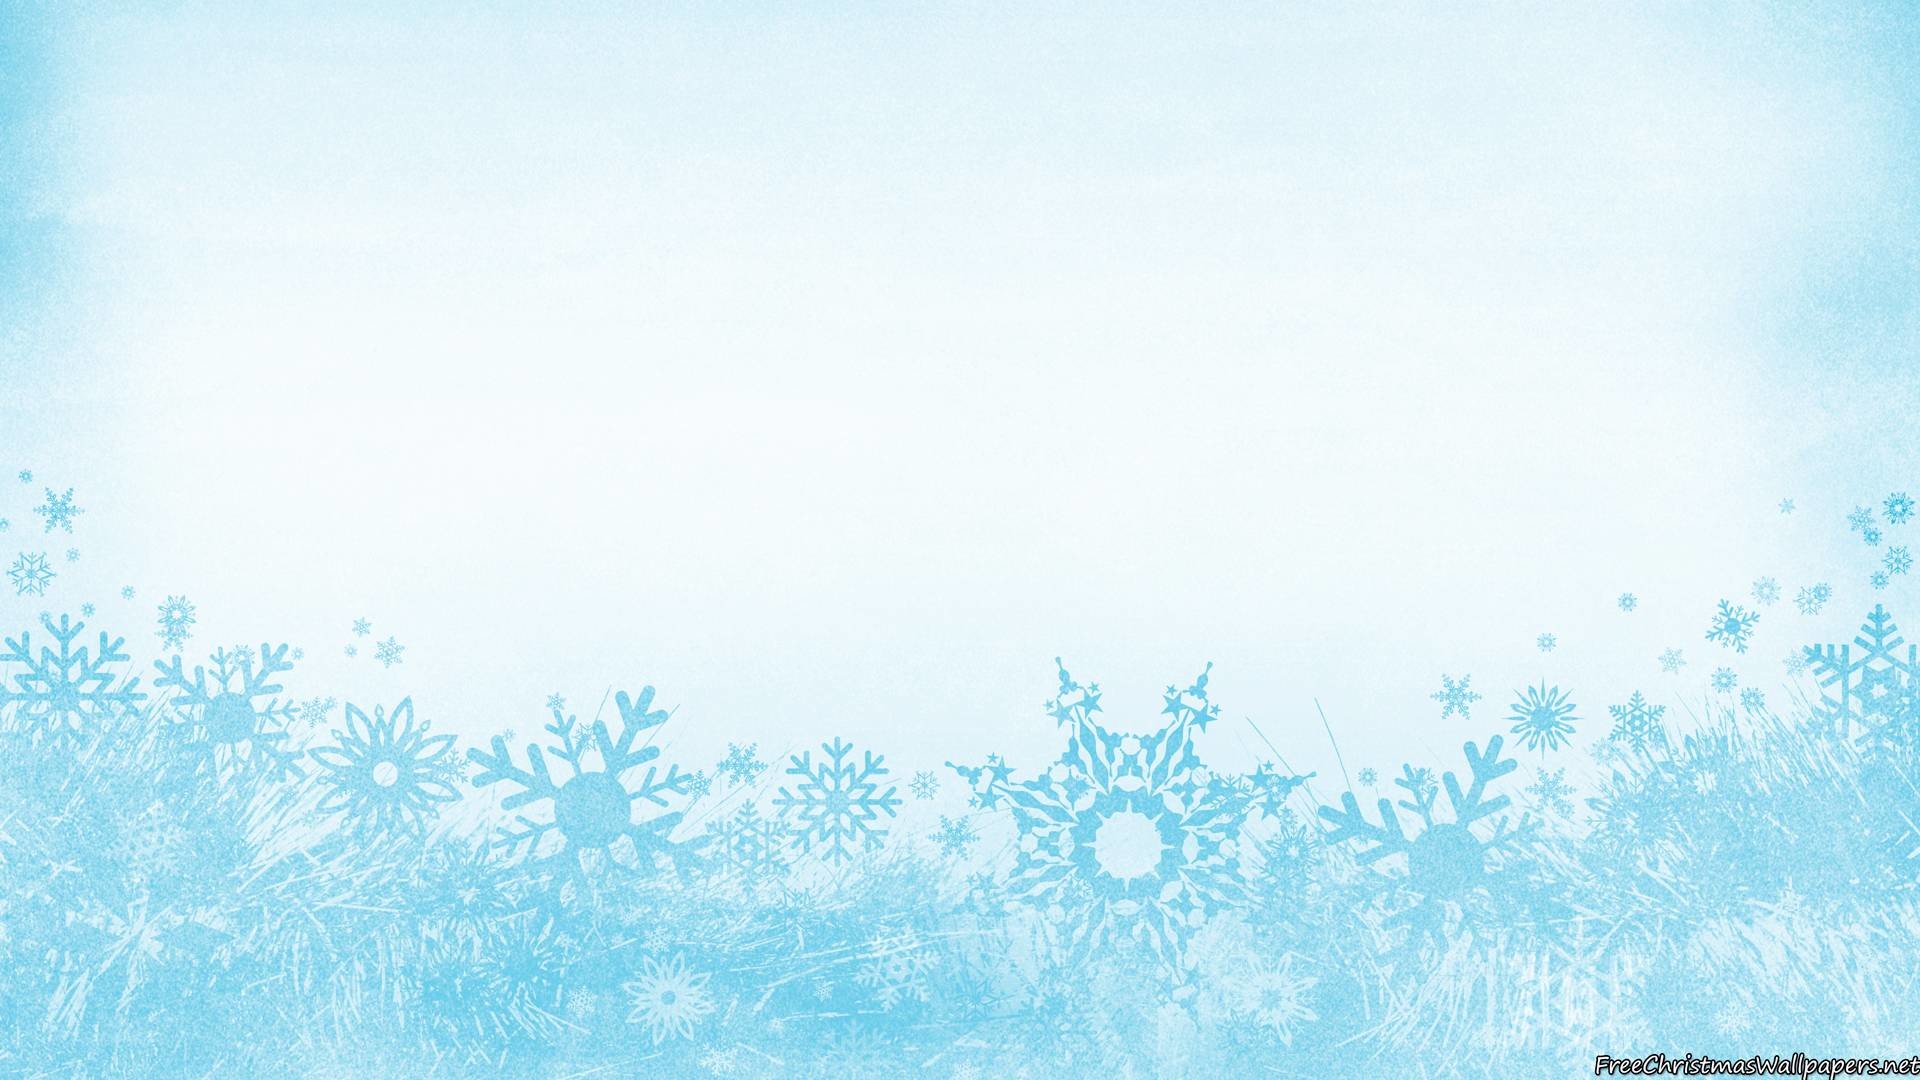 1920x1080 Free Christmas Desktop Background Wallpaper